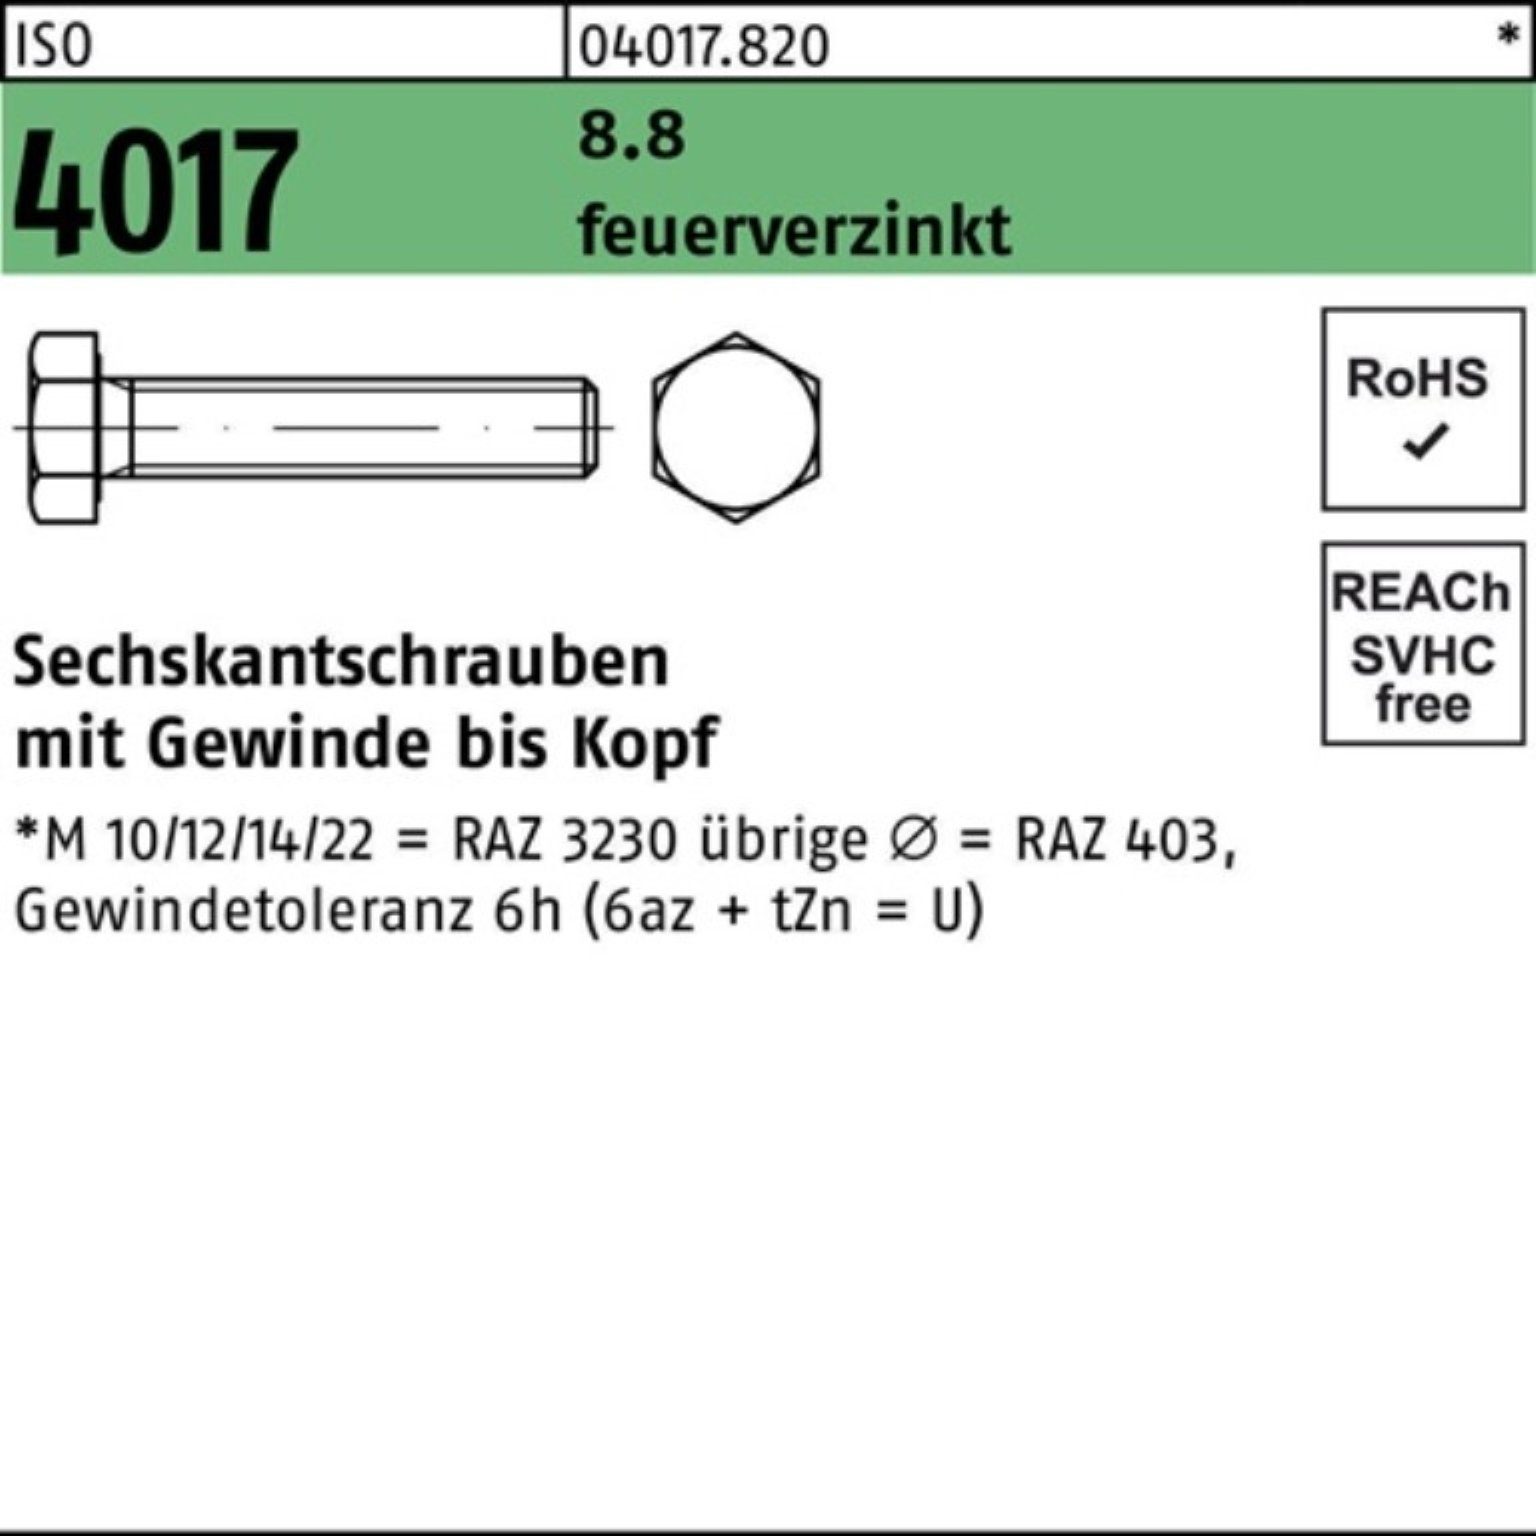 feuerverz. M30x Sechskantschraube Pack 4017 Stü Bufab 80 Sechskantschraube ISO VG 8.8 1 100er